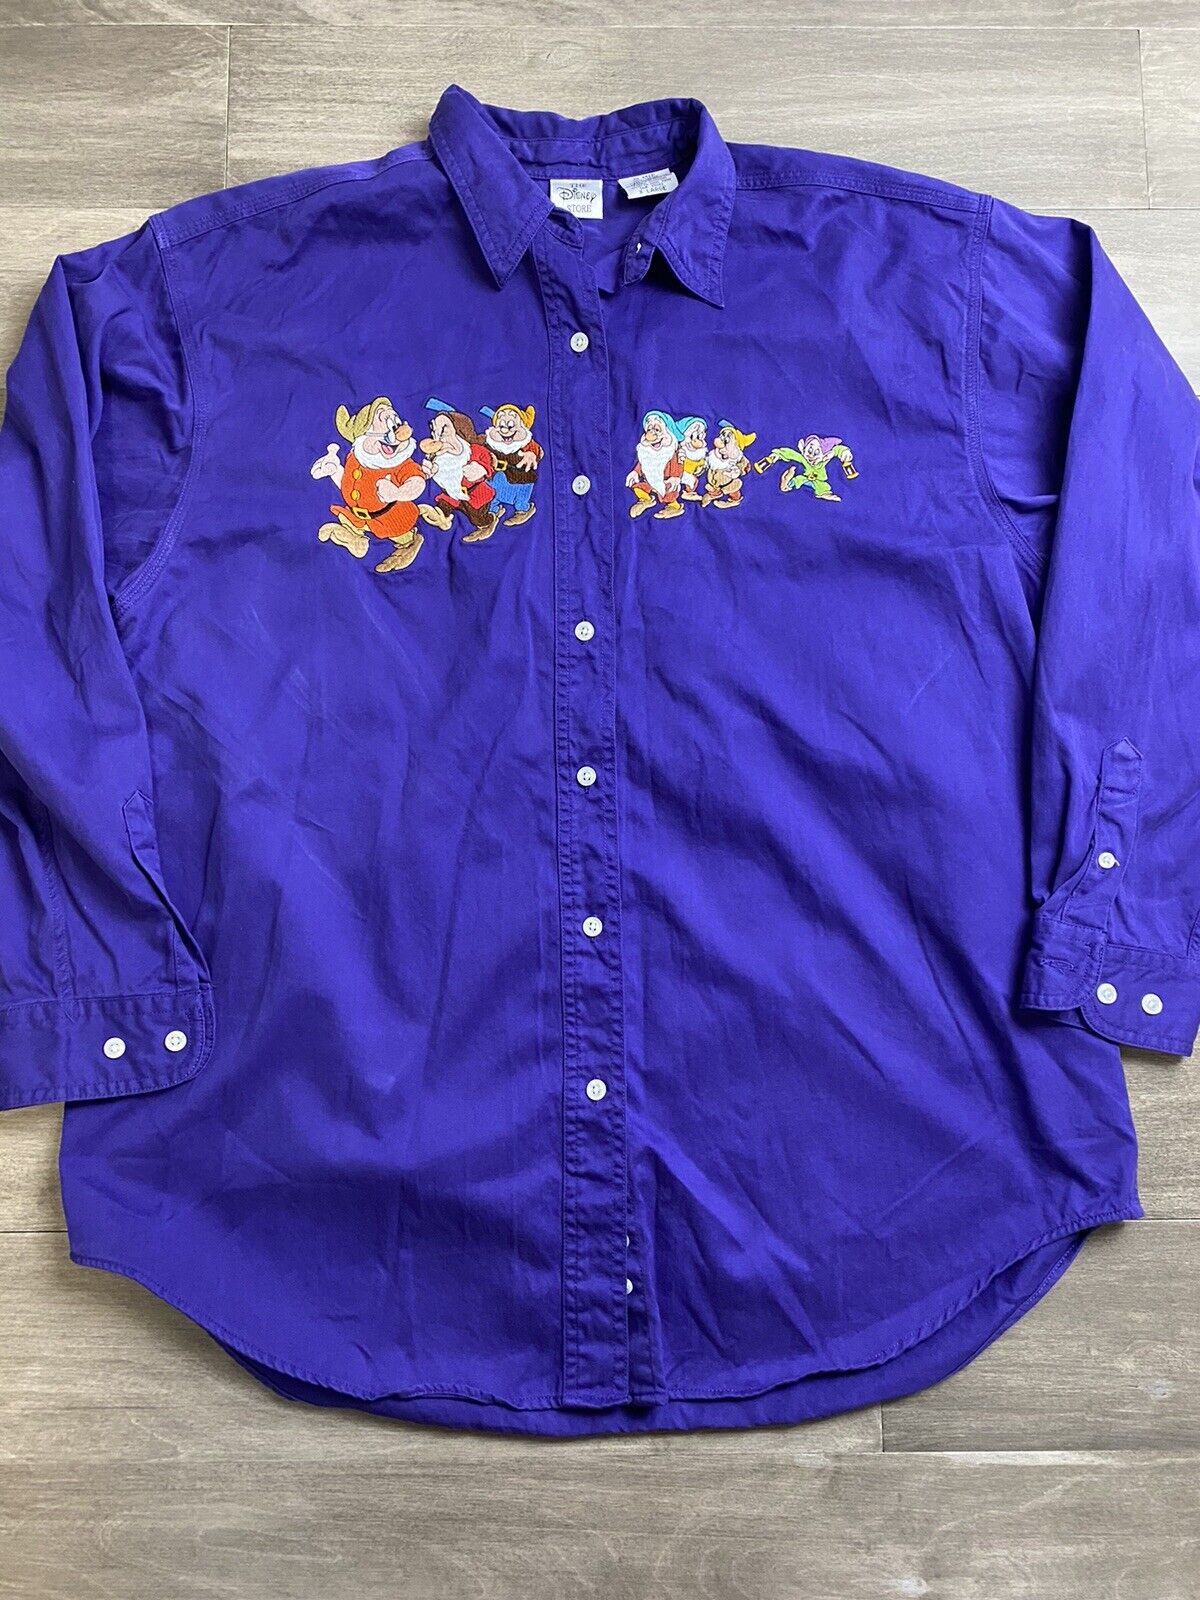 Vintage Disney Store Seven Dwarfs Long Sleeve Purple Button Down Shirt Size Xl